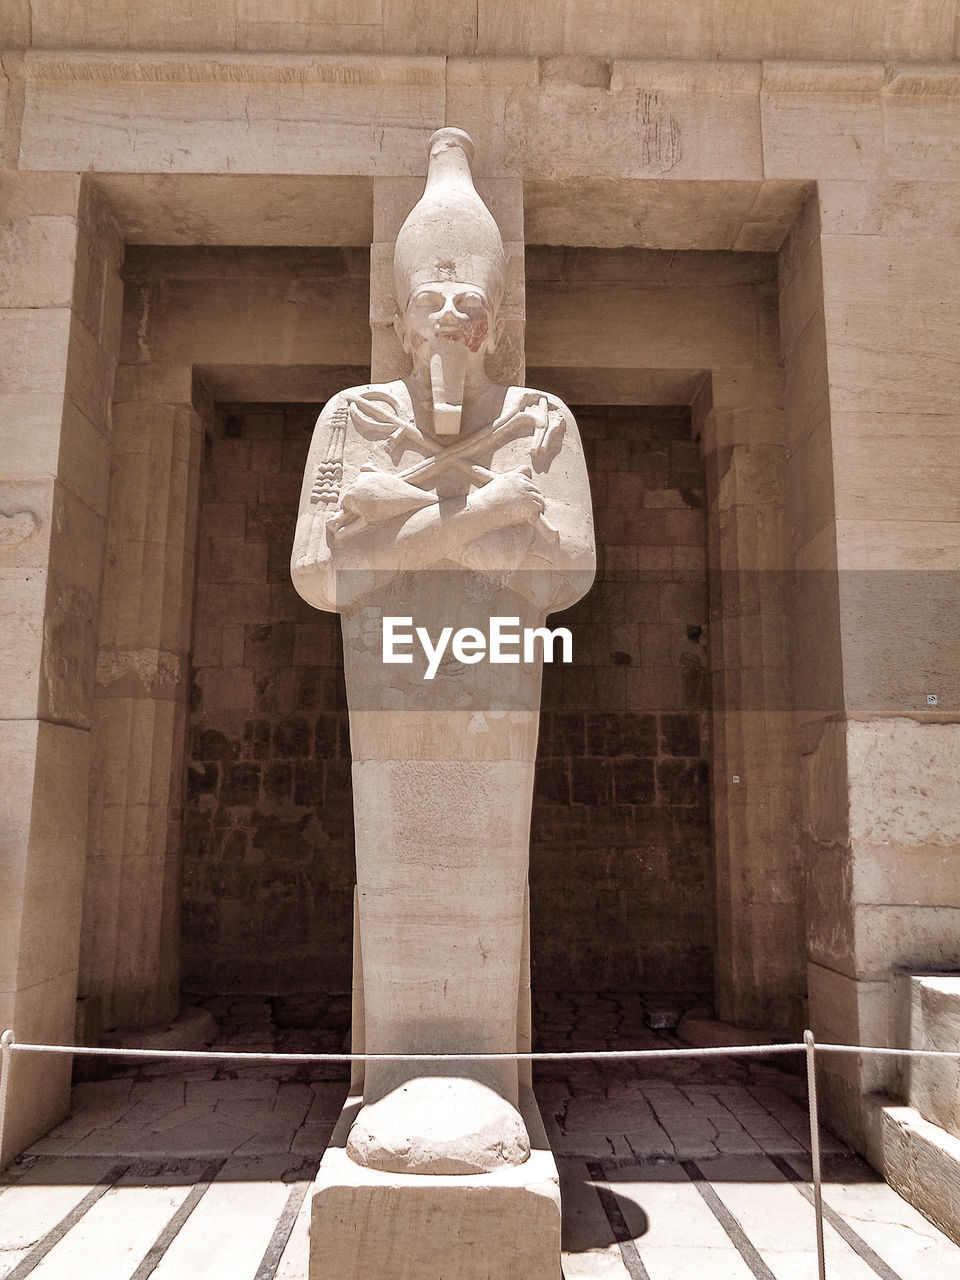 Mortuari temple of hatshepsut in deir el-bahari egypt 